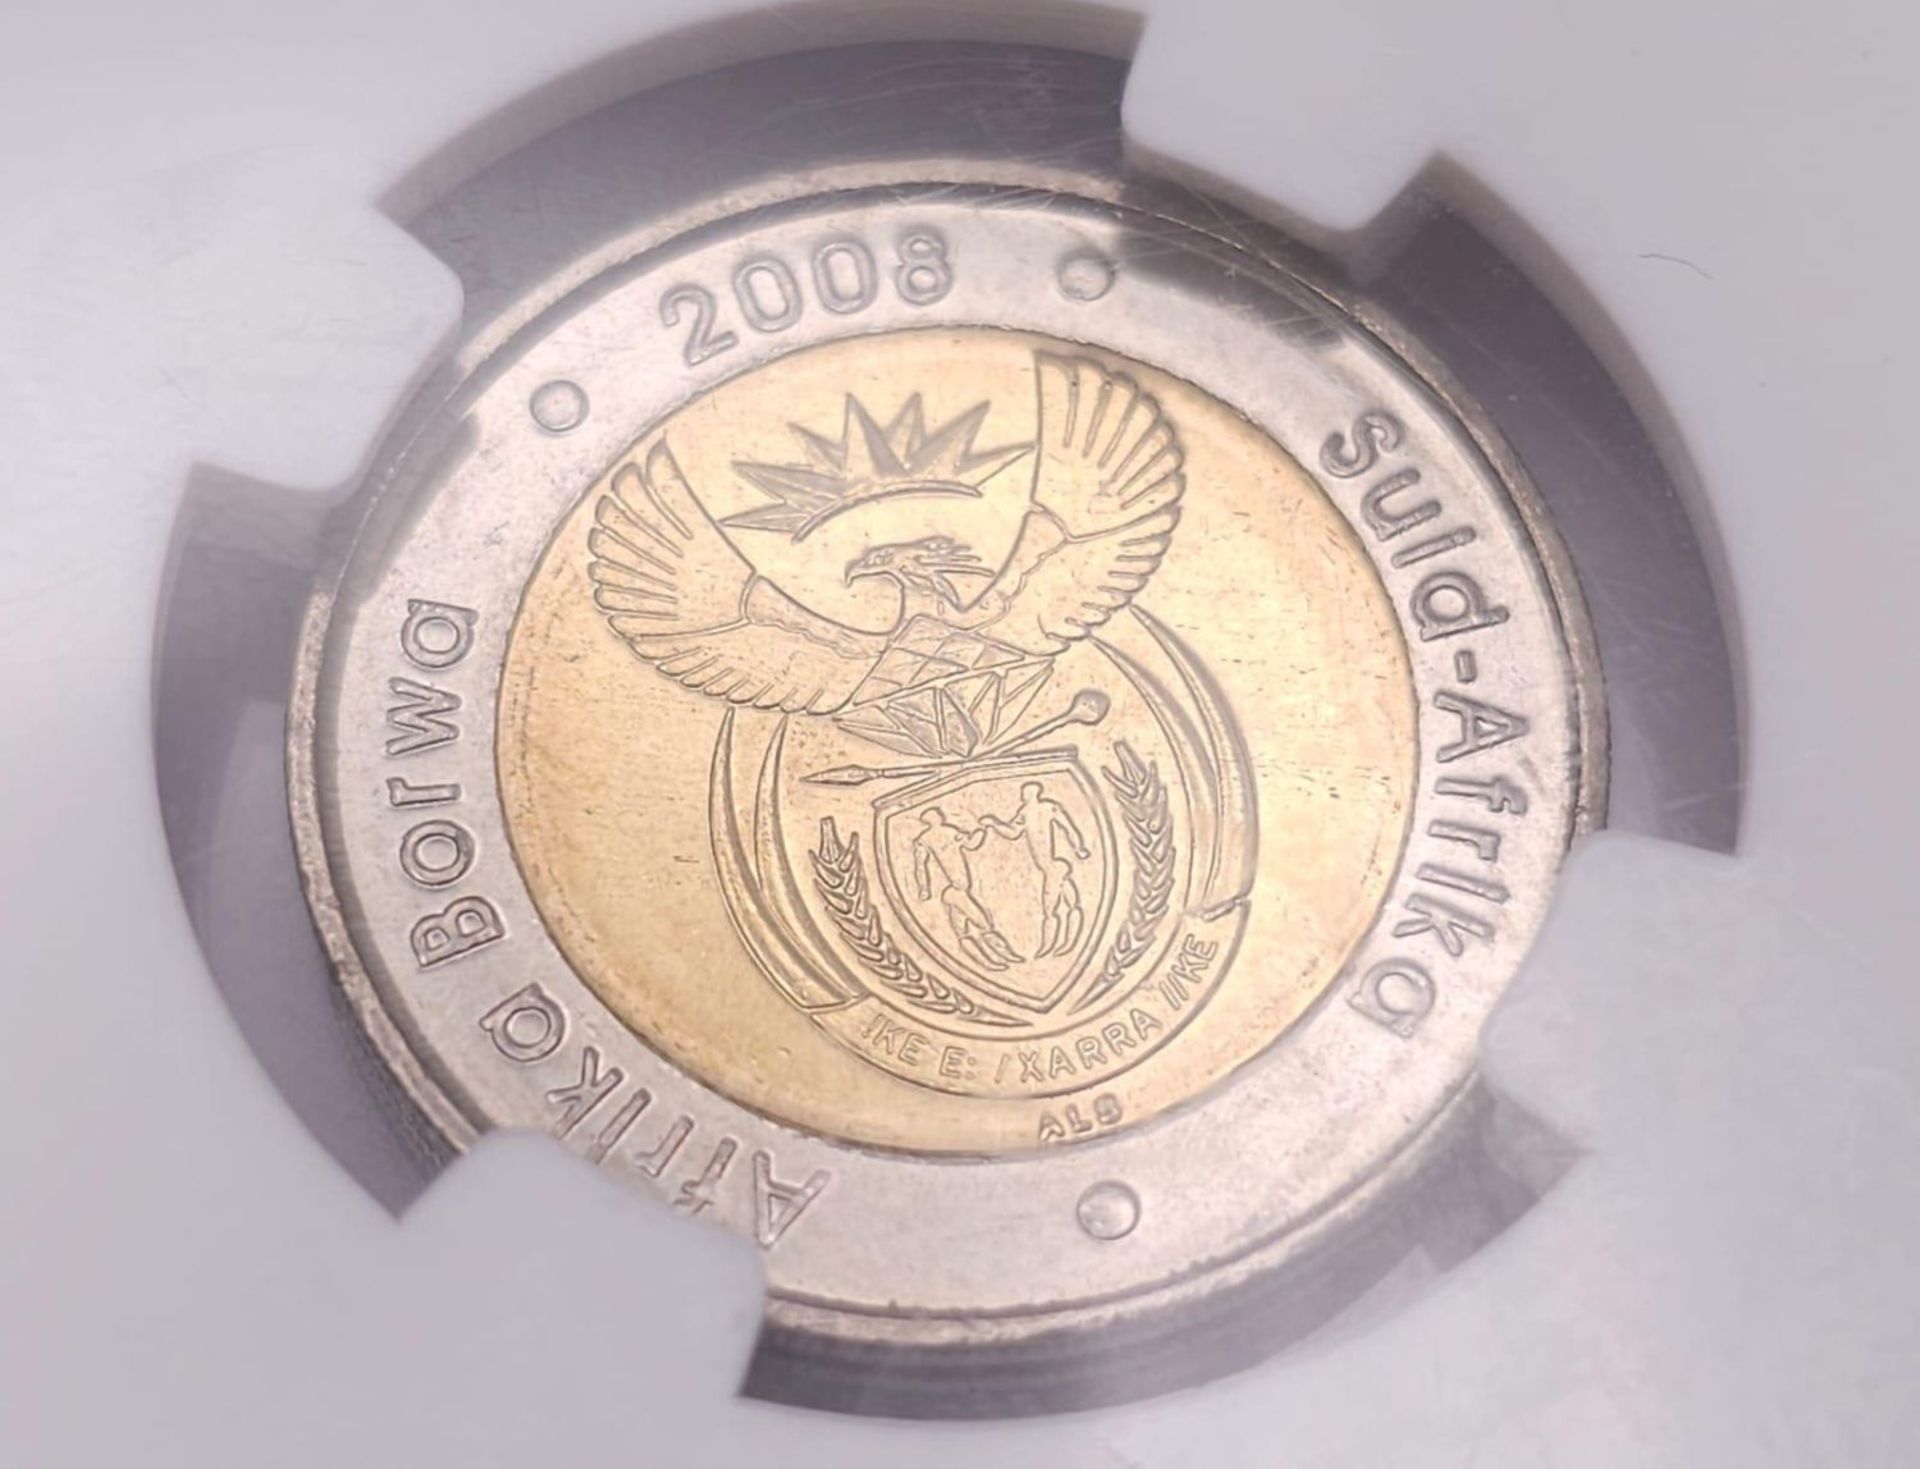 A 2008 MANDELA 90th BIRTHDAY COMMEMORATIVE COIN IN PRESENTATATION CAPSULE . - Image 10 of 10